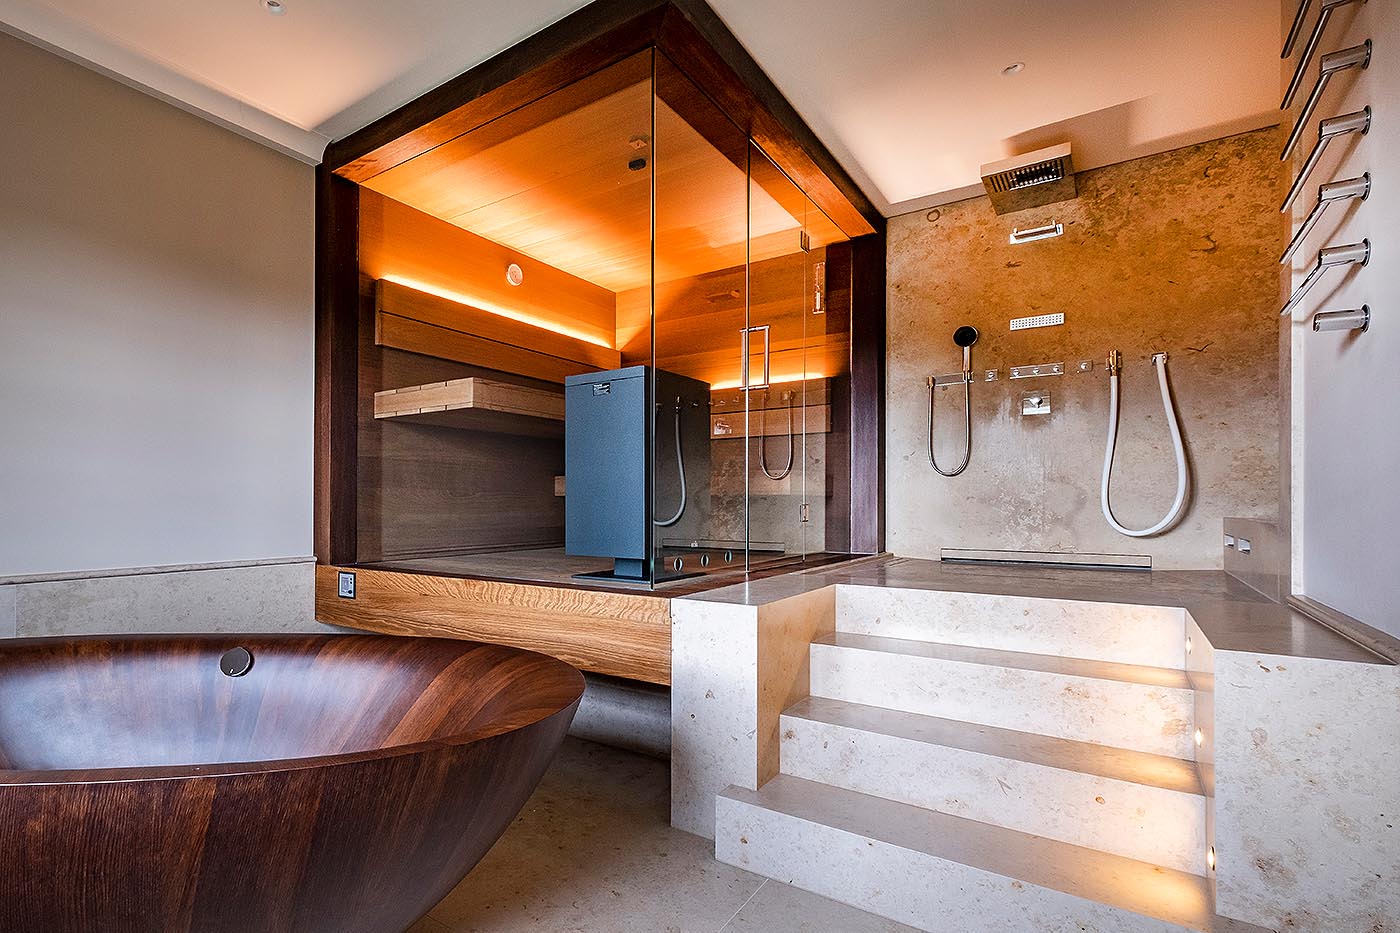 Luxus sauna nimbus corso 3 1 | corso saunamanufaktur